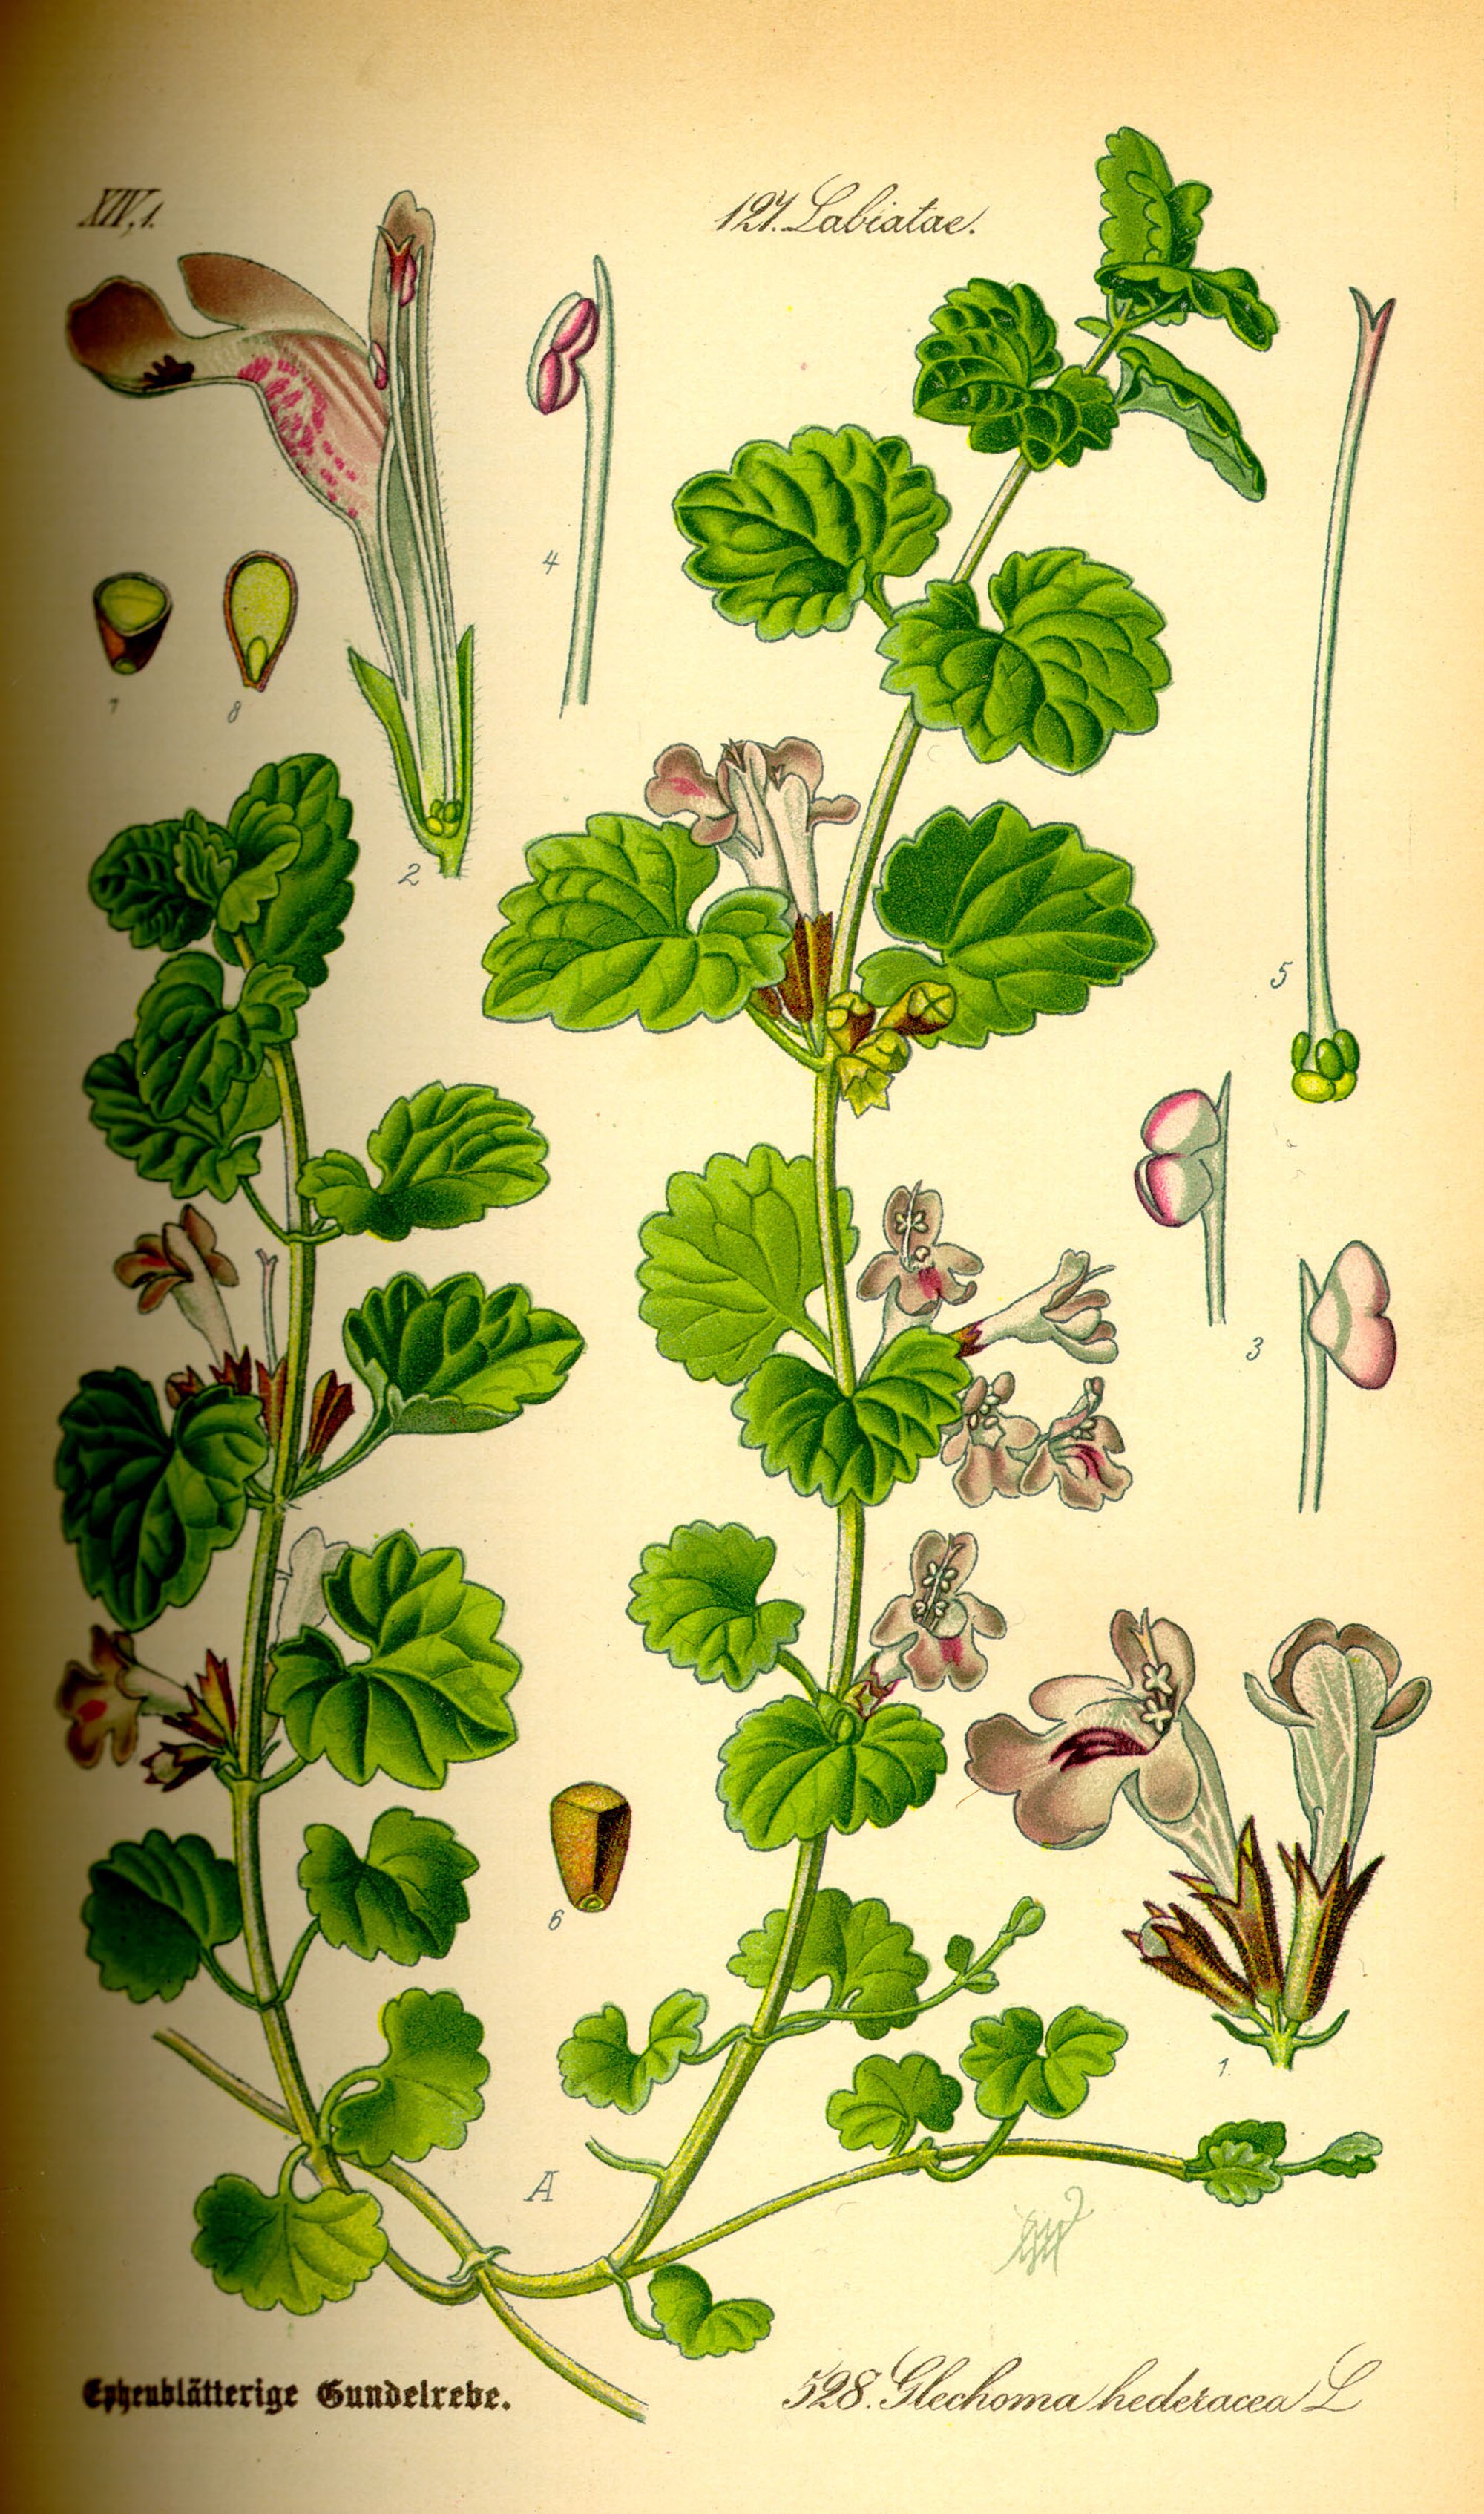 1885 Creeping Charlie botanical illustration.